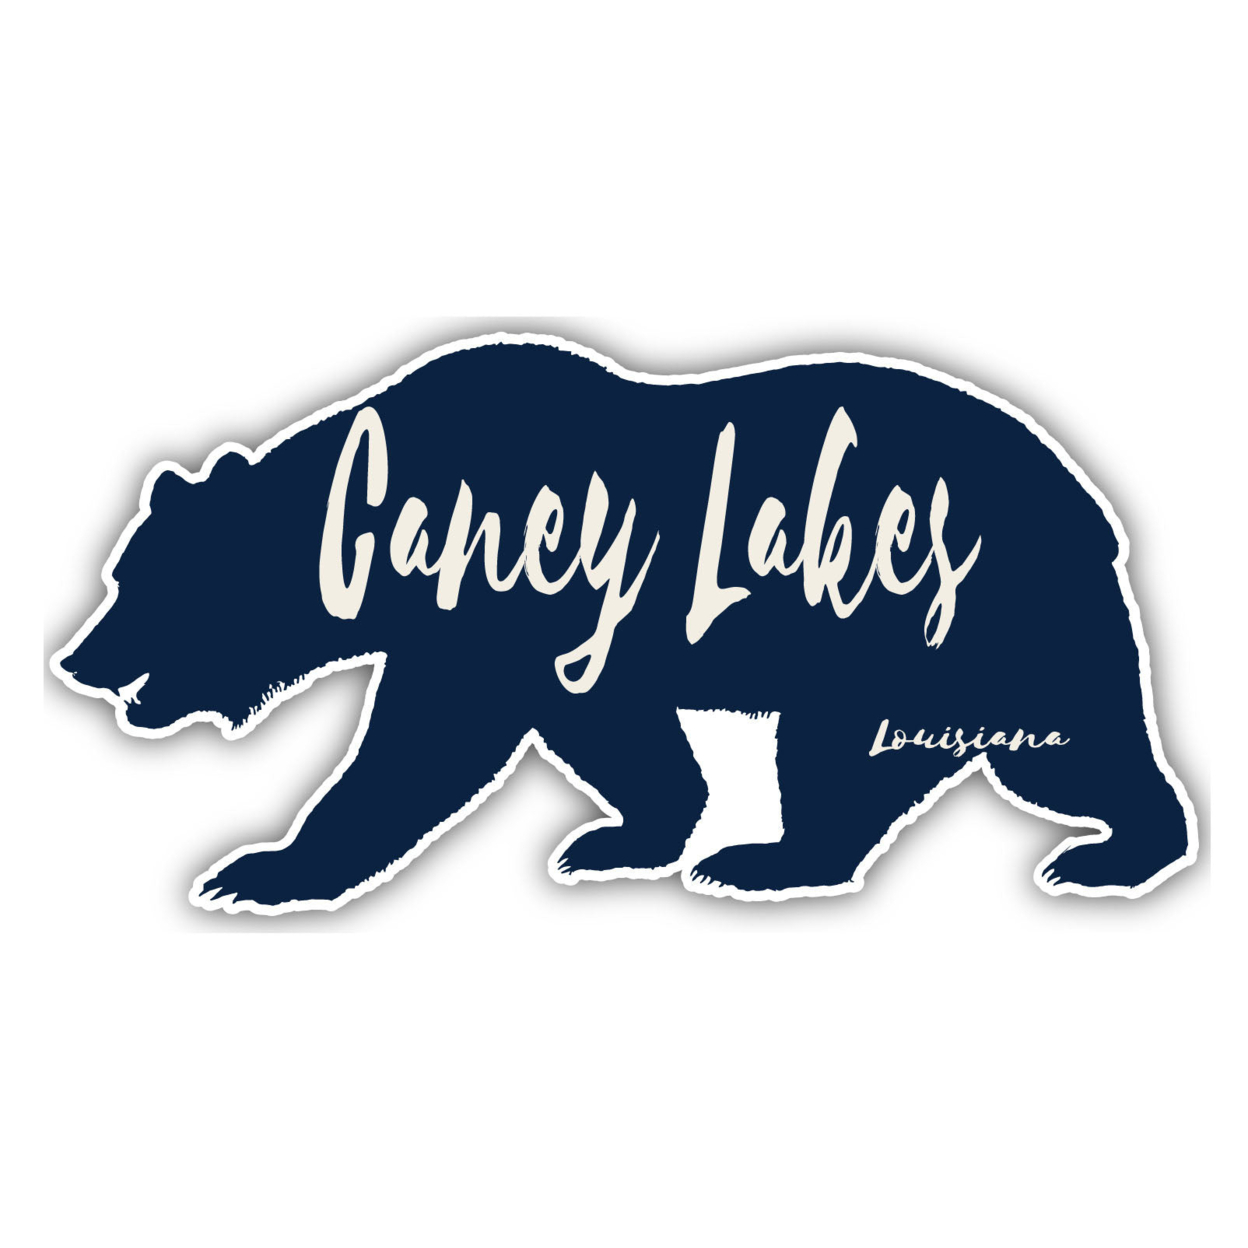 Caney Lakes Louisiana Souvenir Decorative Stickers (Choose Theme And Size) - Single Unit, 8-Inch, Bear